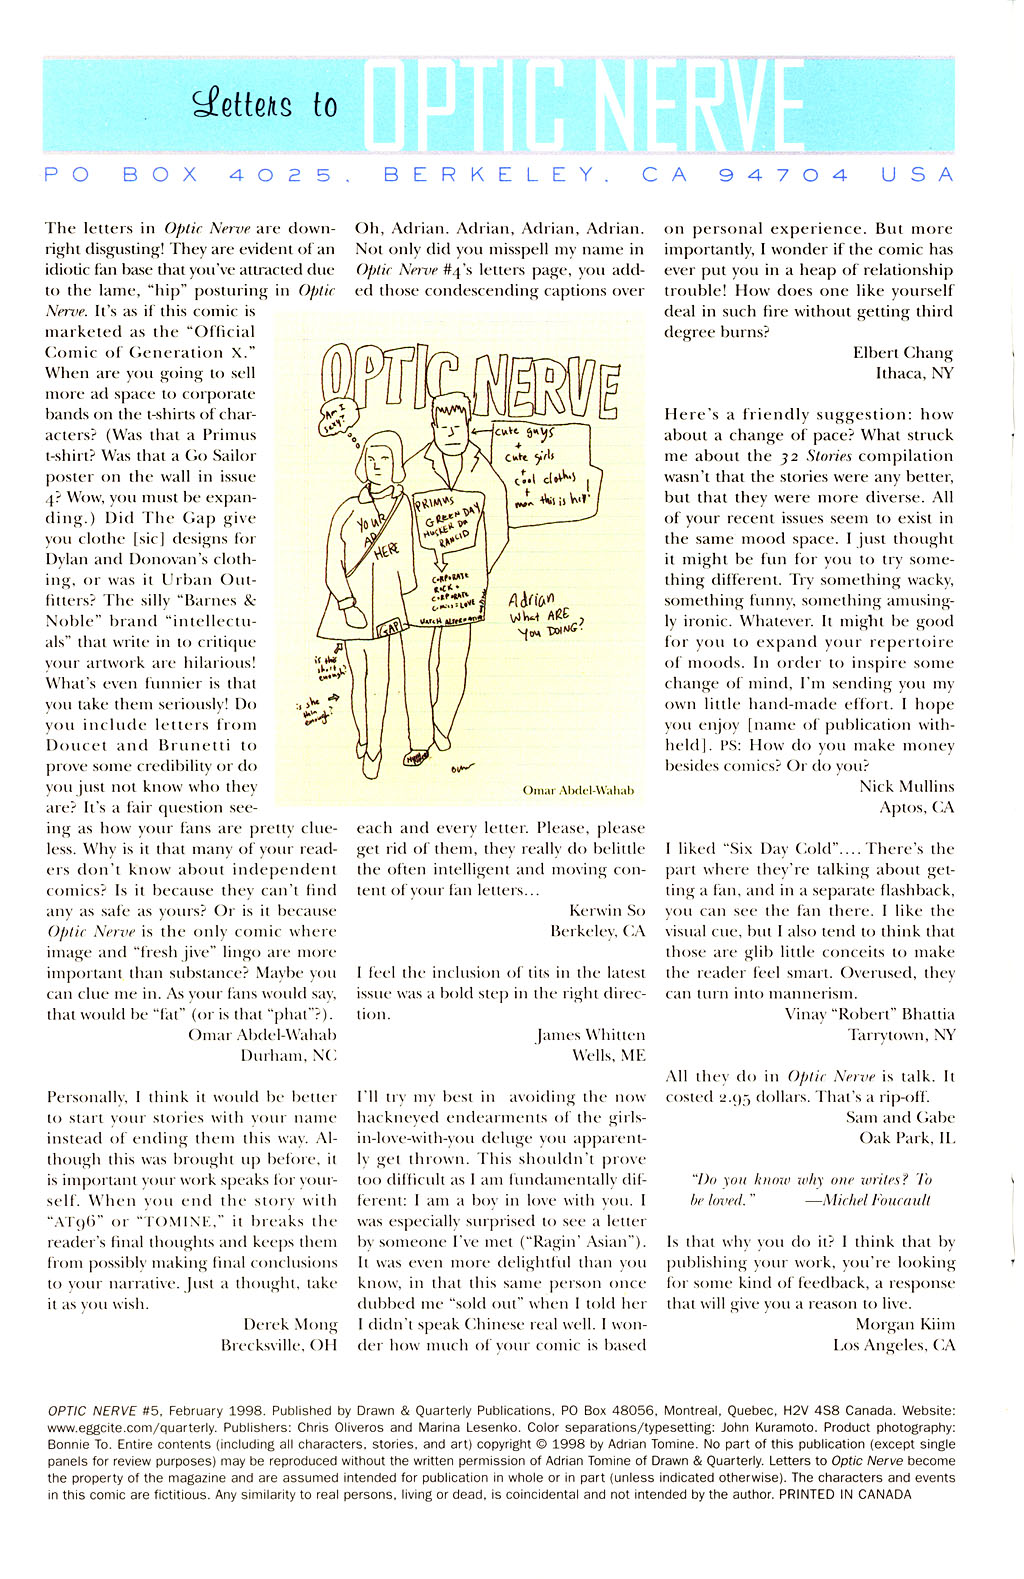 Read online Optic Nerve comic -  Issue #5 - 2